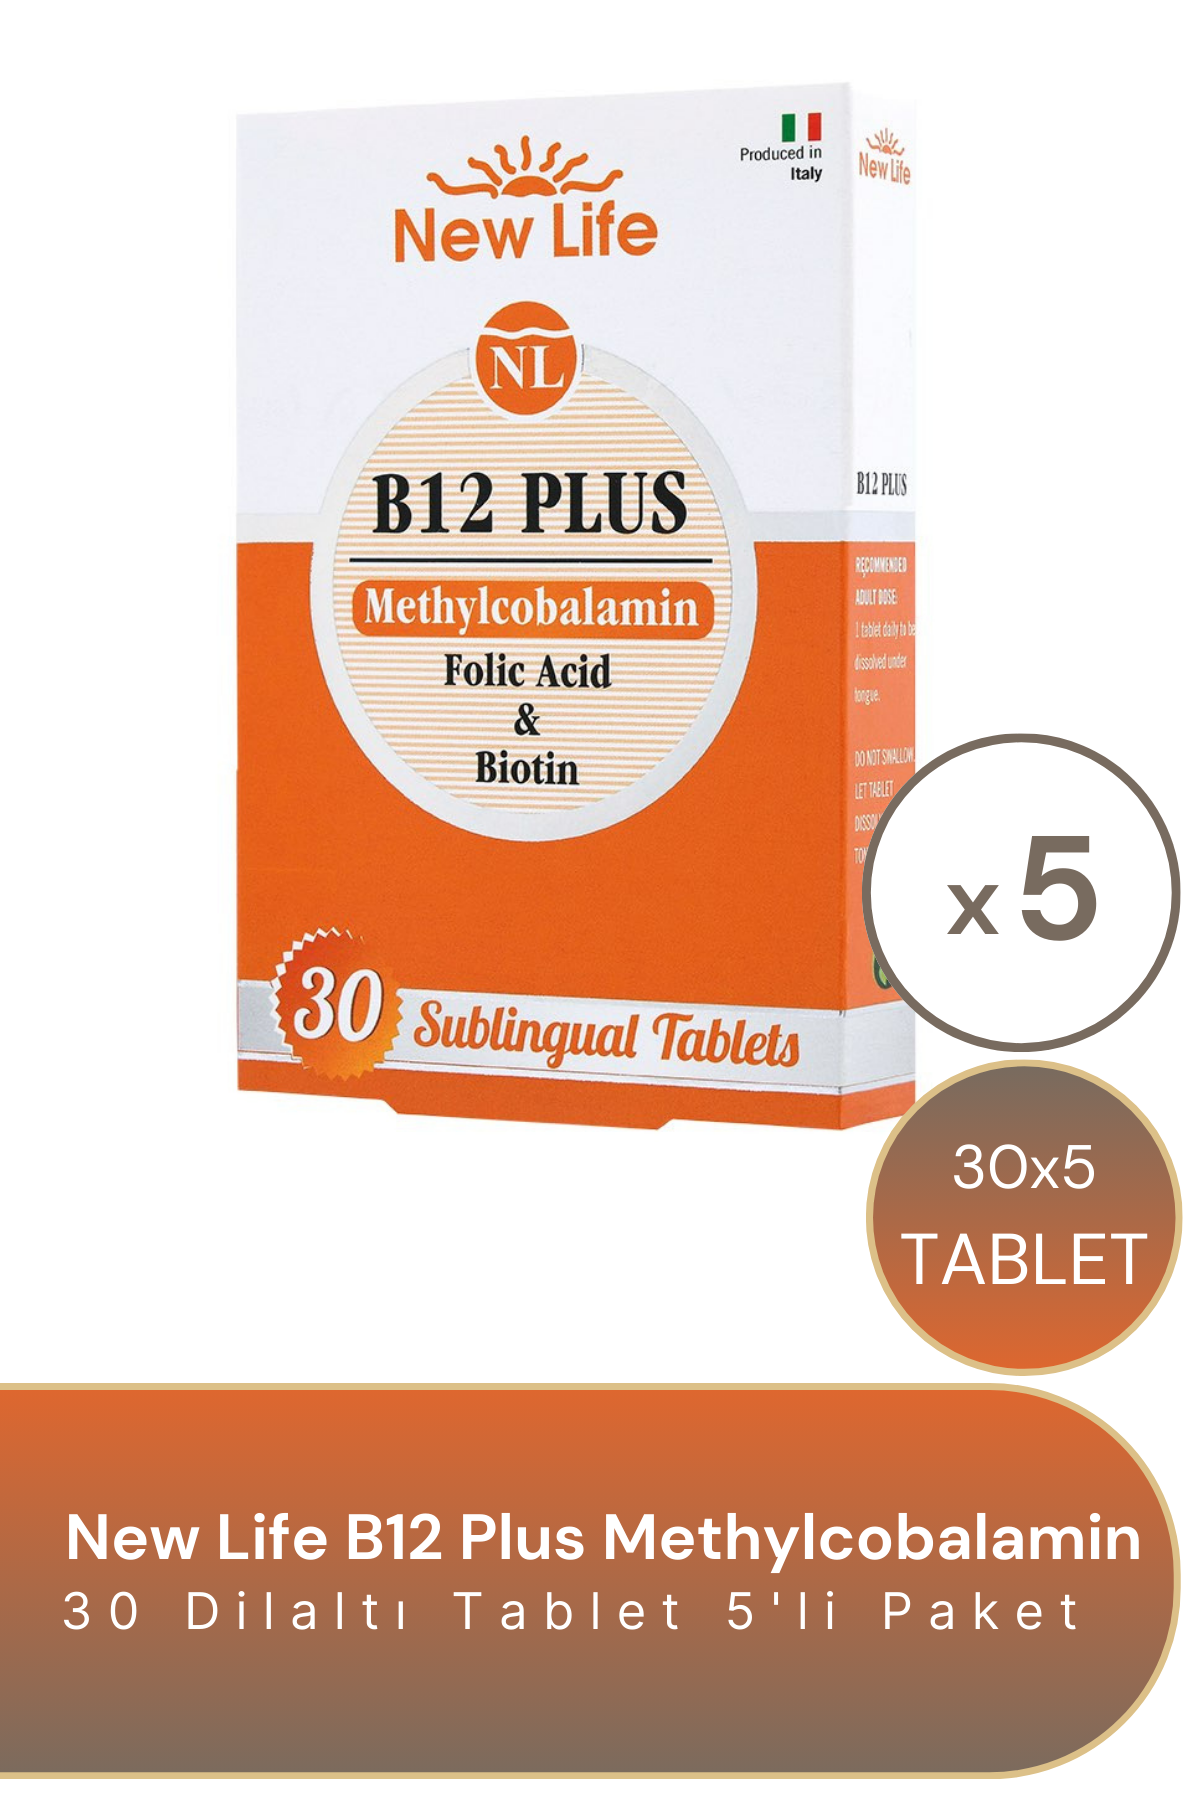 New Life Metilkobalamin B12 Plus 1000 mcg 30 Dilaltı Tablet 5'li Paket